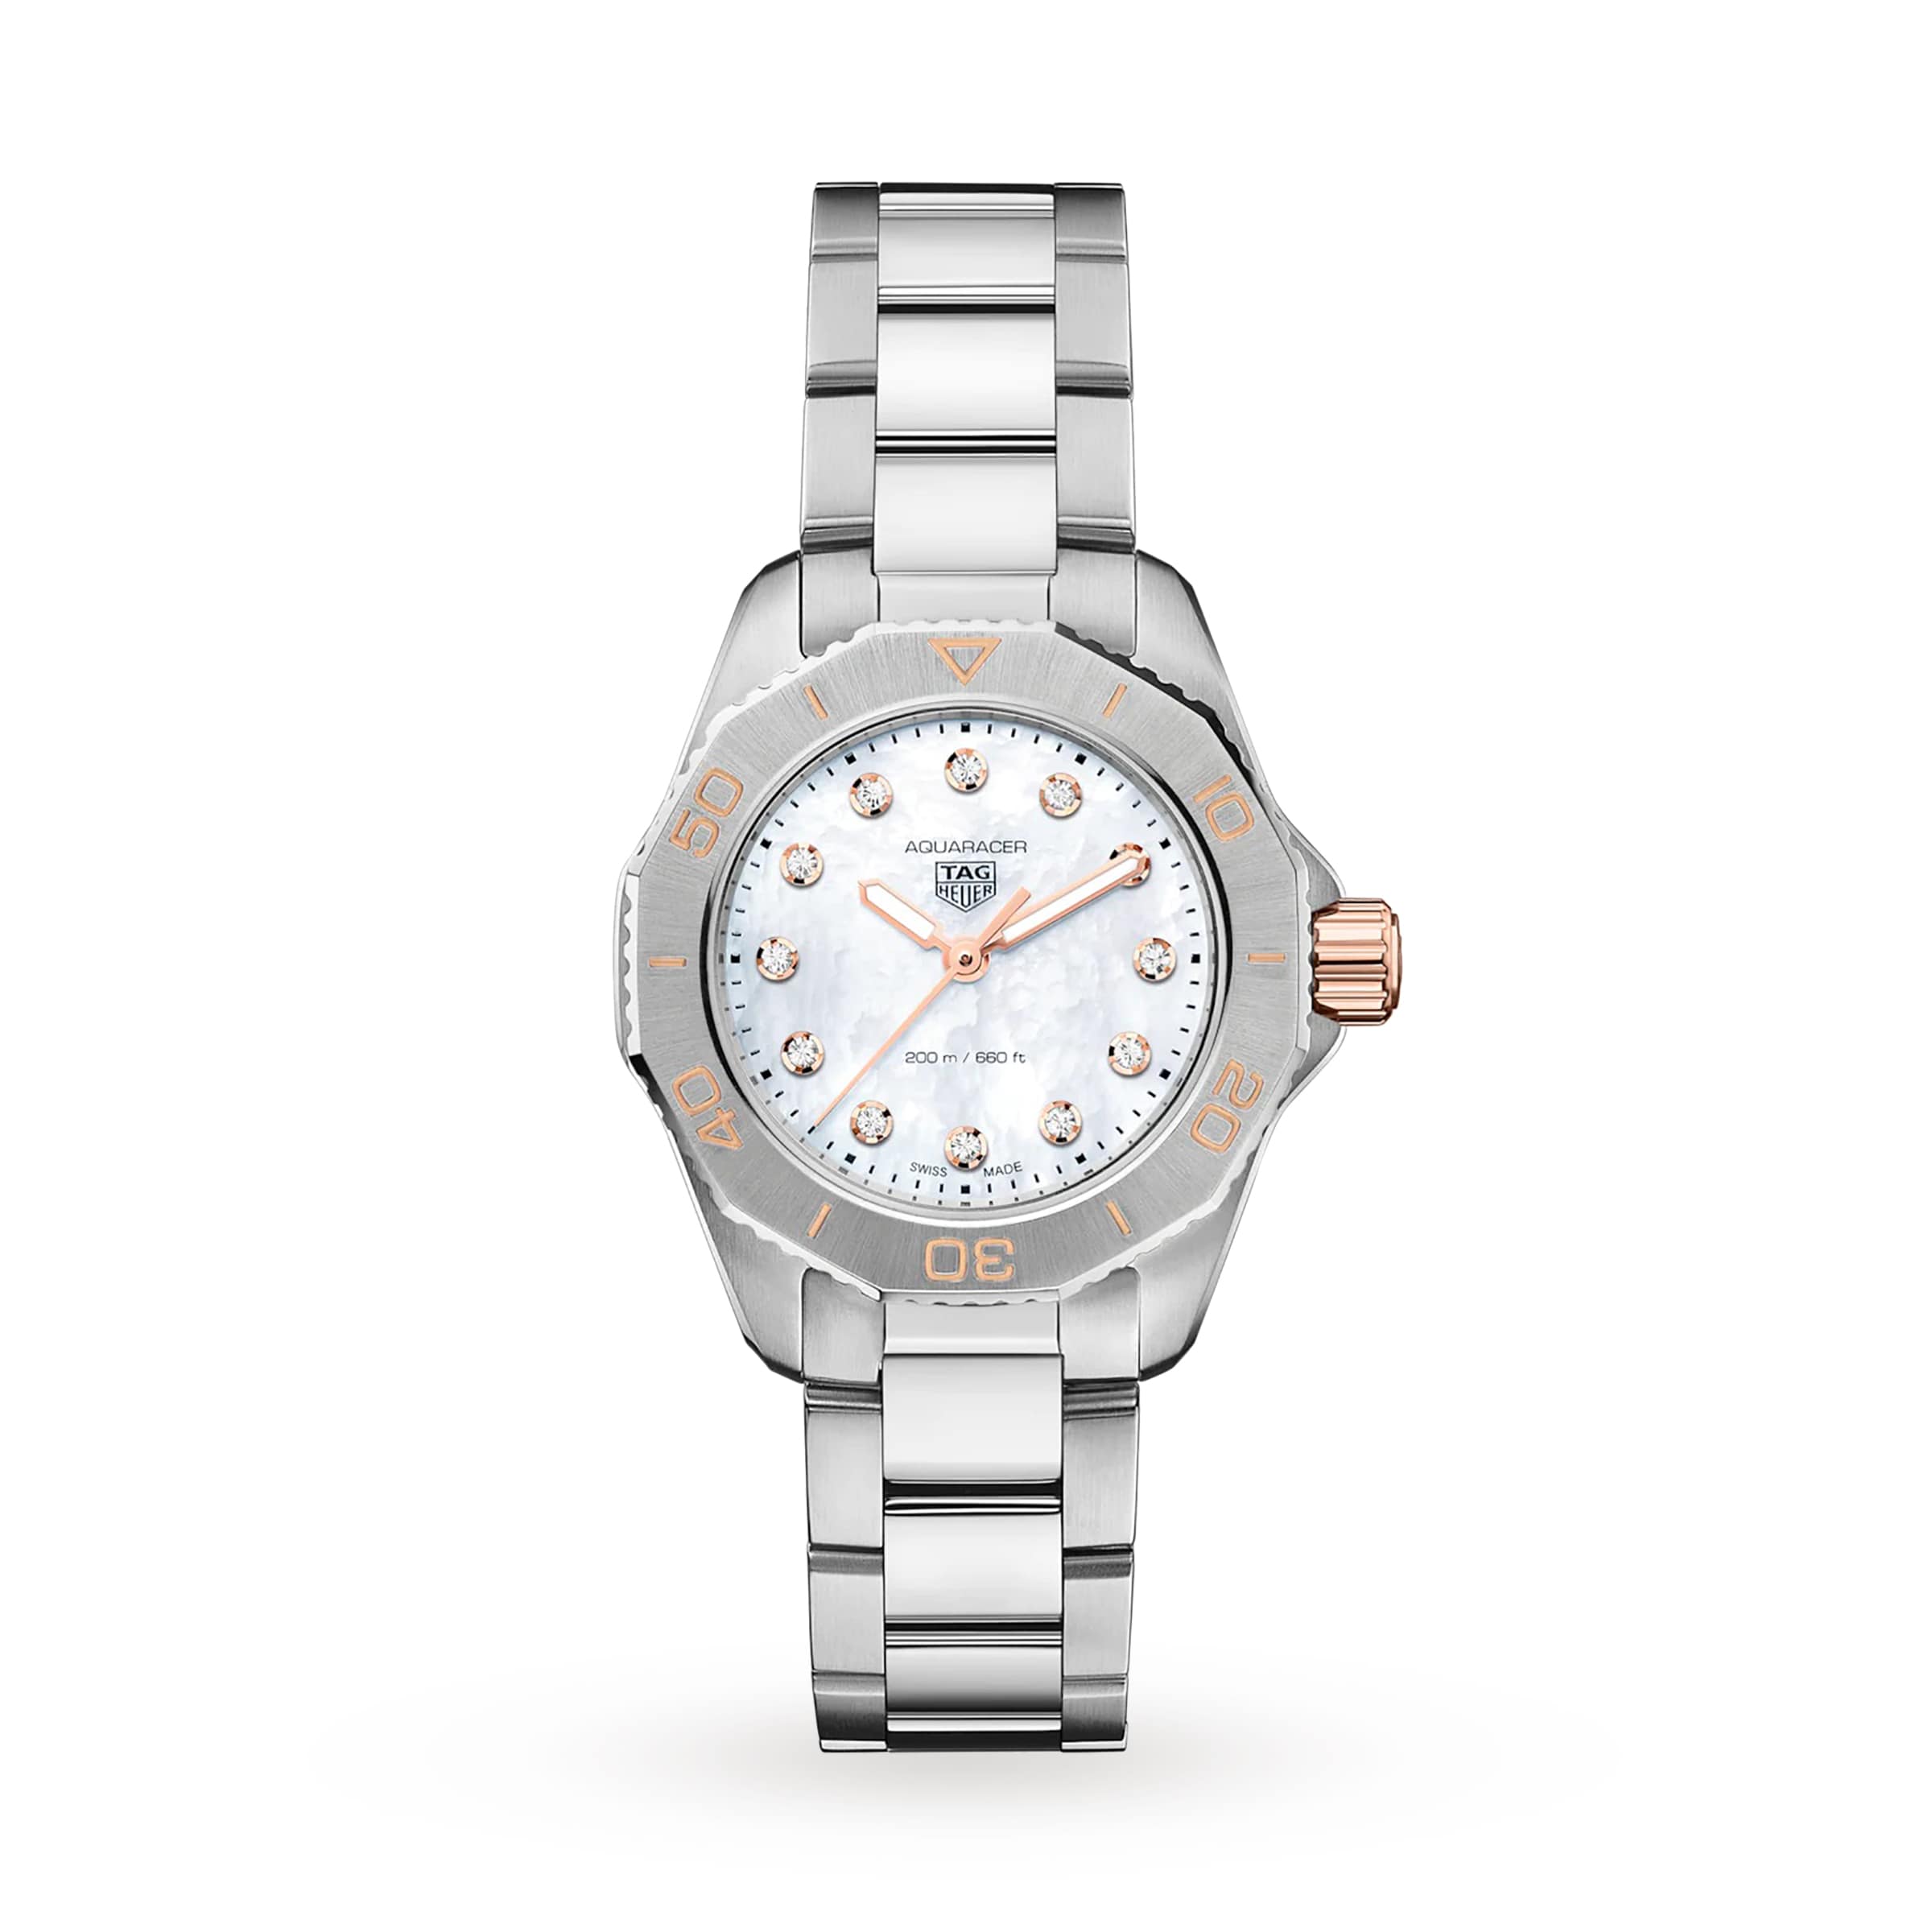 Connected watch of TAG Heuer and Porsche - Porsche Newsroom